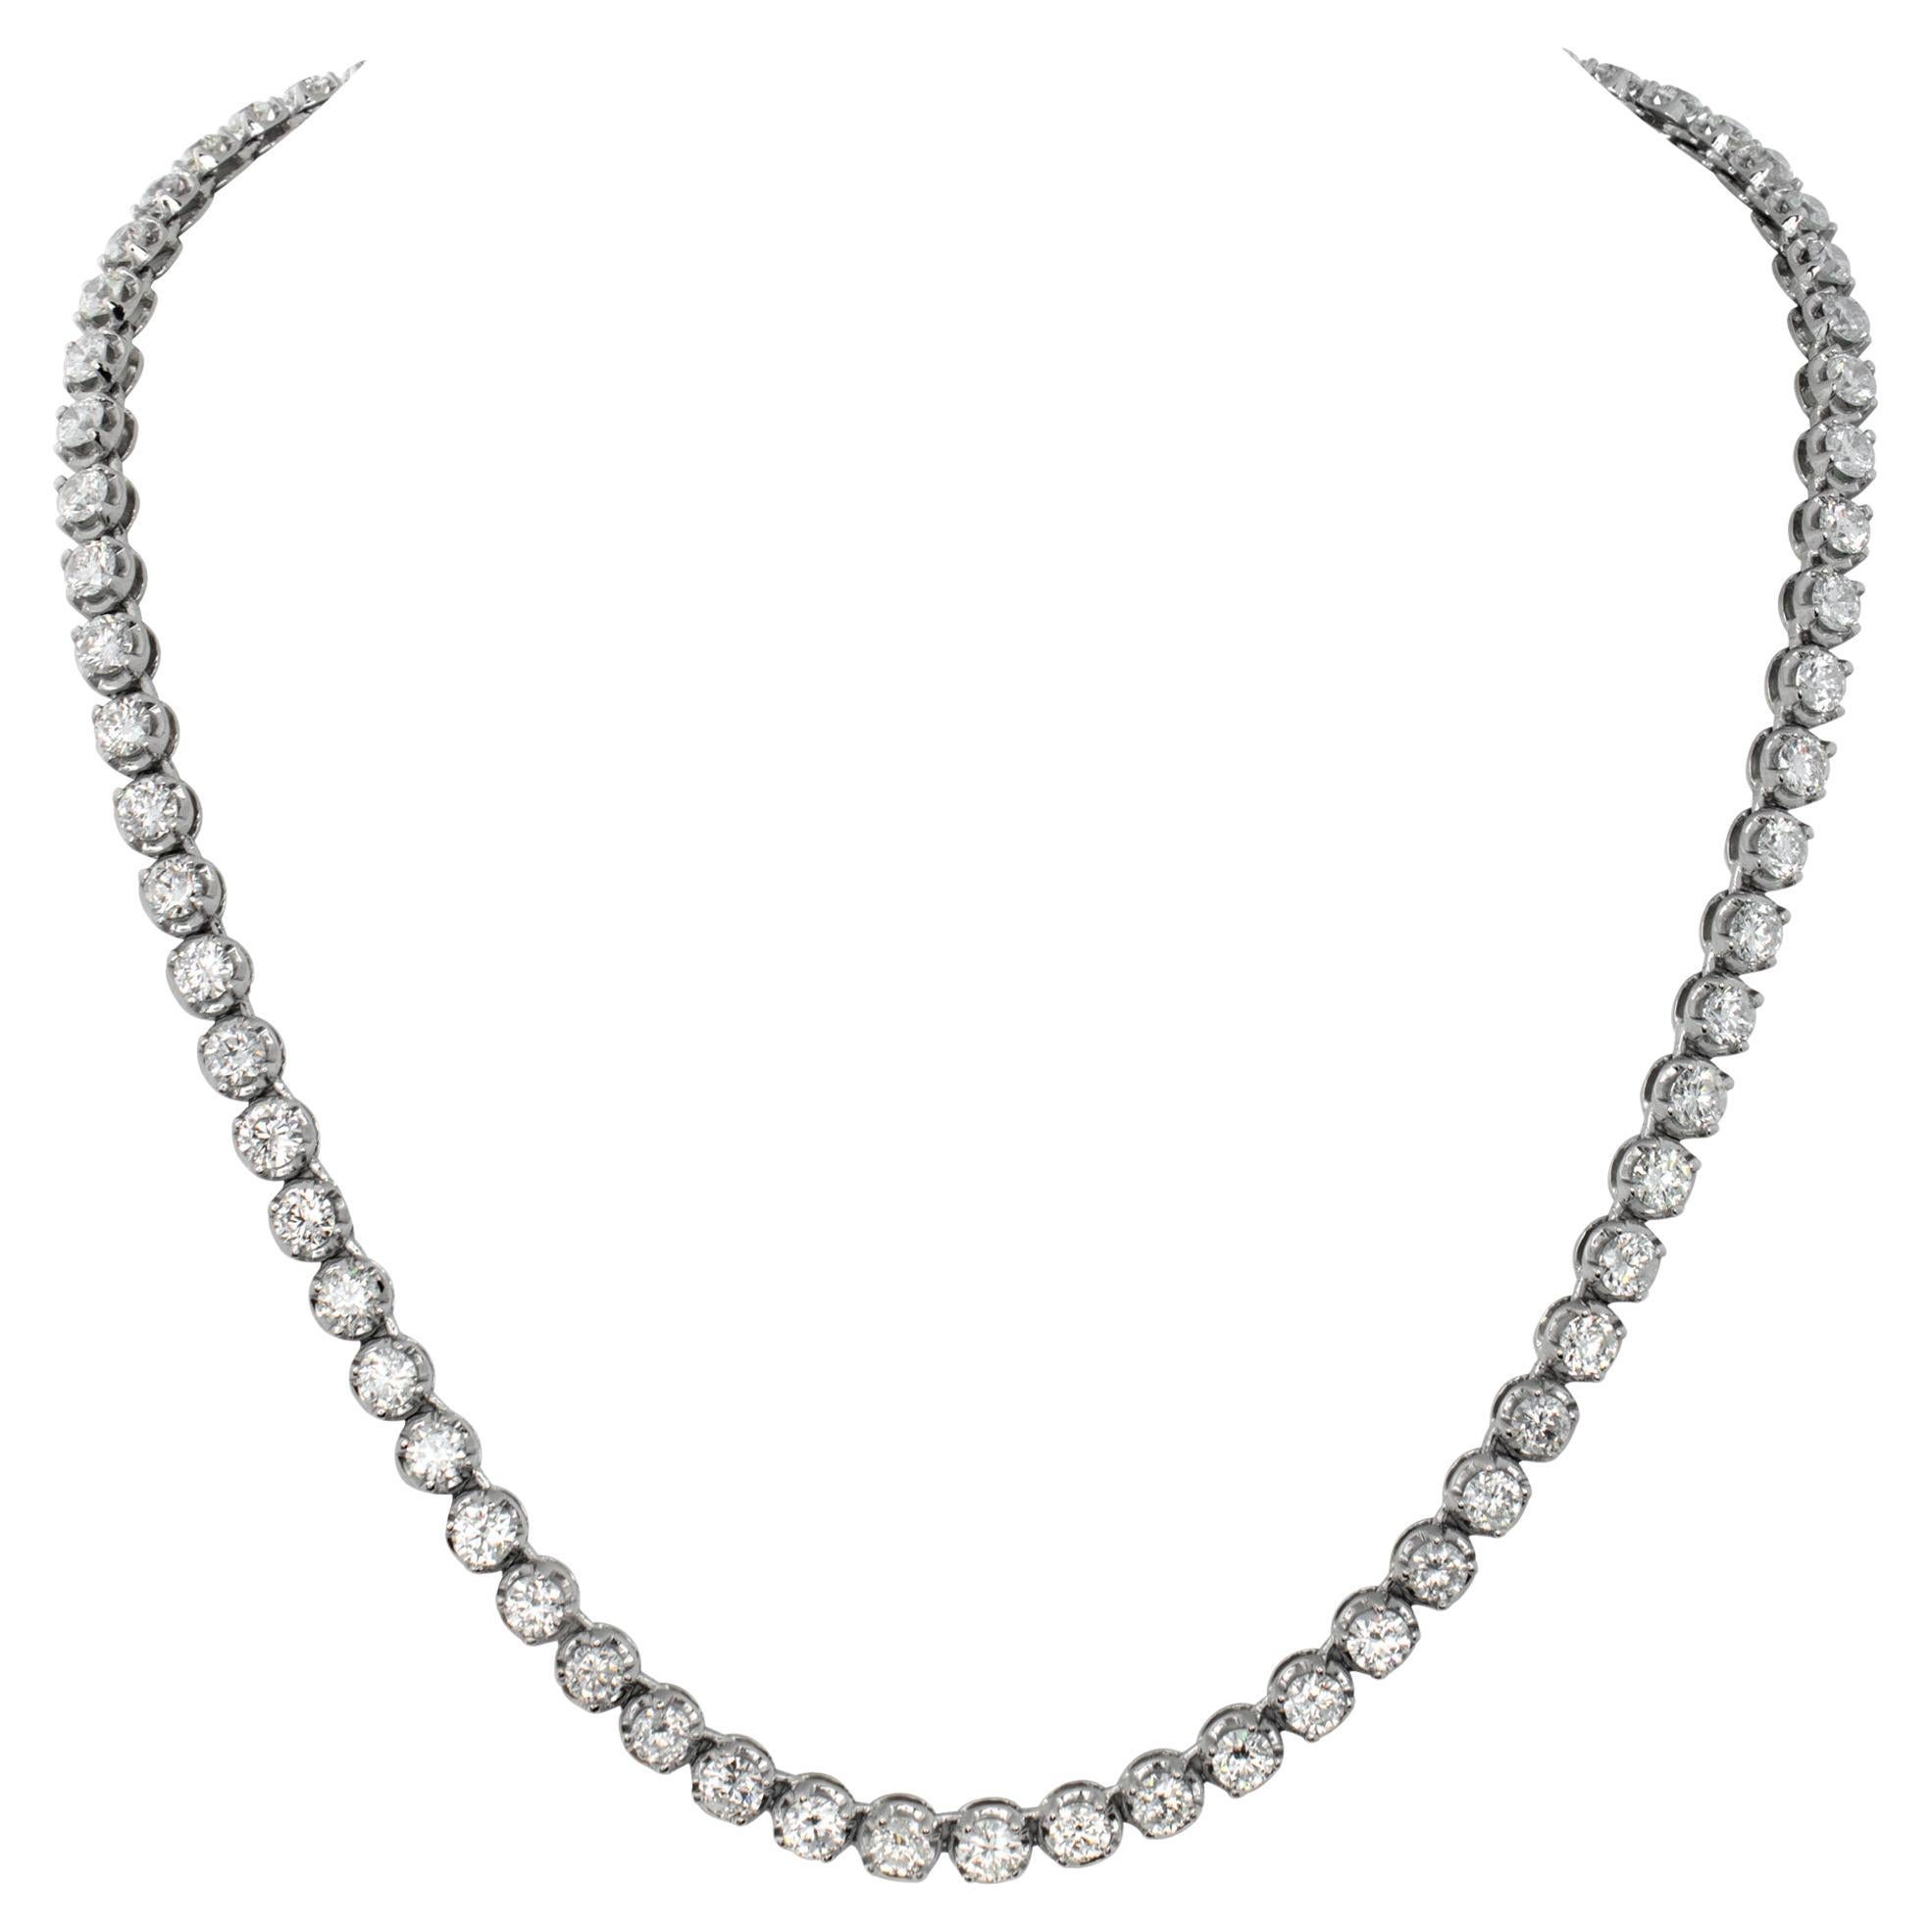 Platinum Riviera diamond necklace with round brilliant cut diamonds